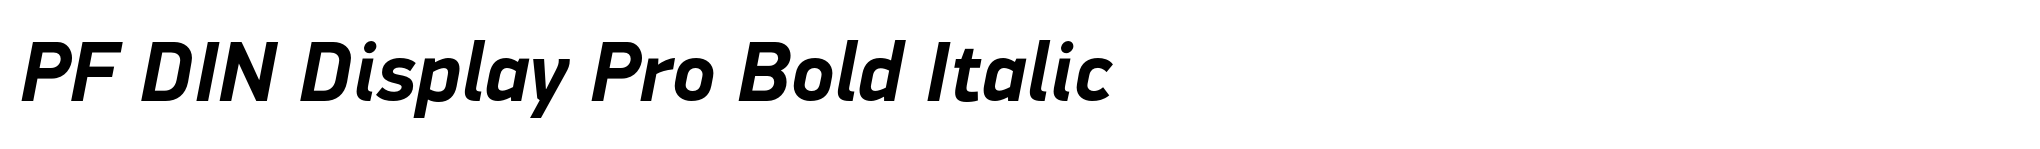 PF DIN Display Pro Bold Italic image